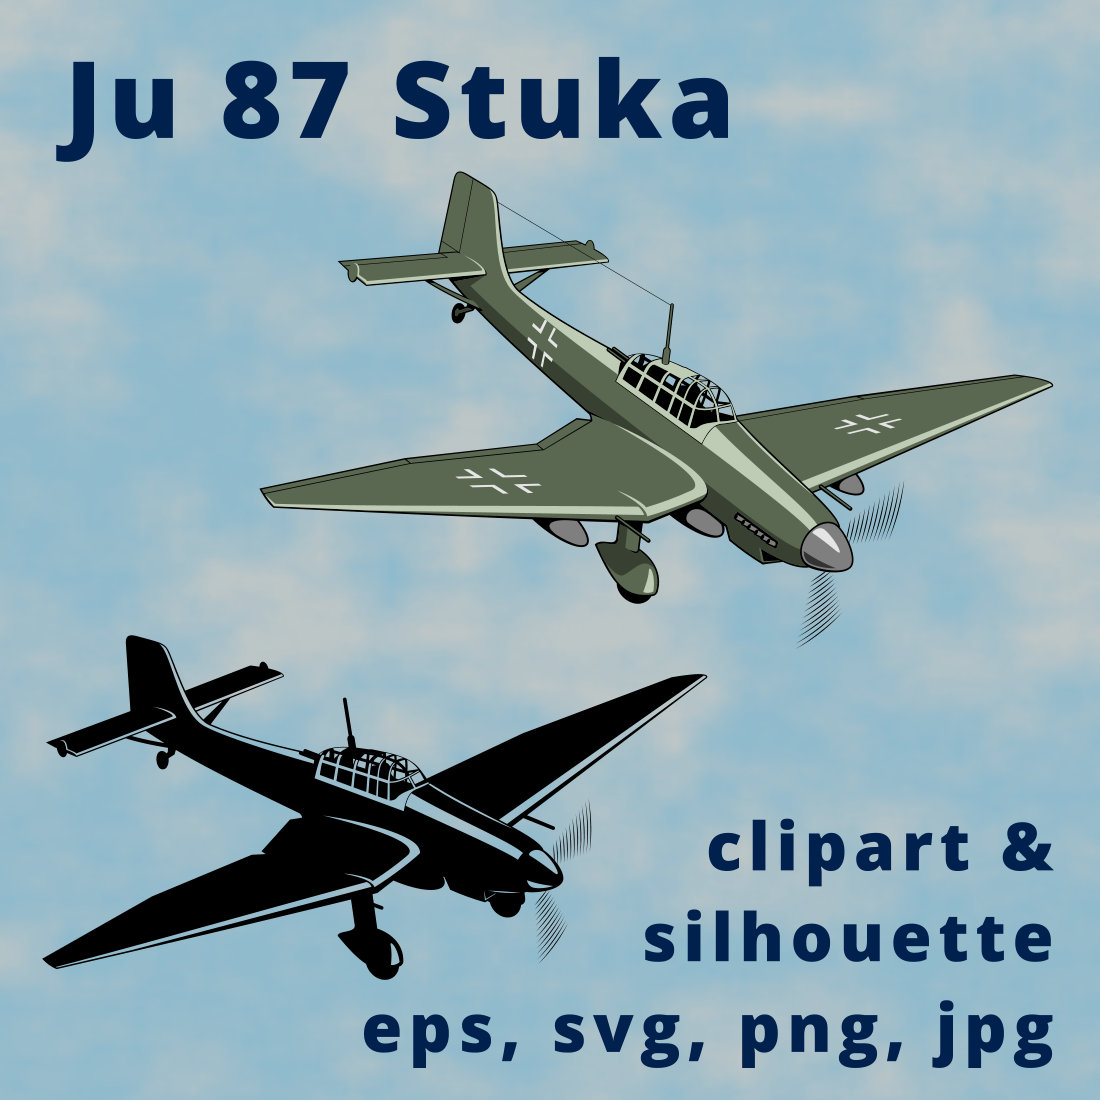 Ju-87 Stuka German Light Bomber Plane Clipart cover image.